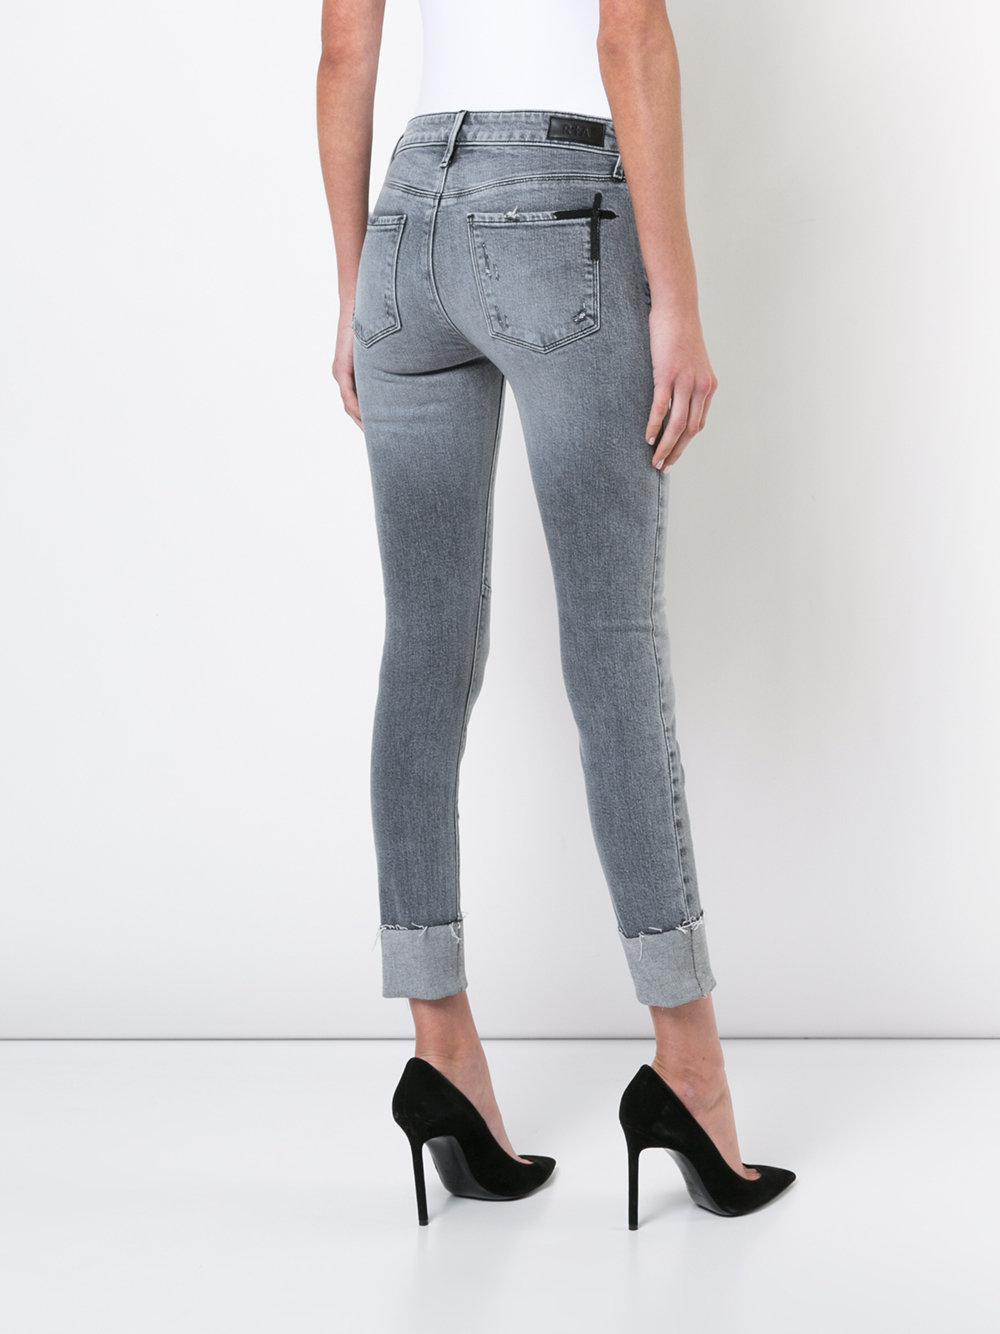 RTA Denim Nova Cuffed Jeans in Grey (Gray) - Lyst